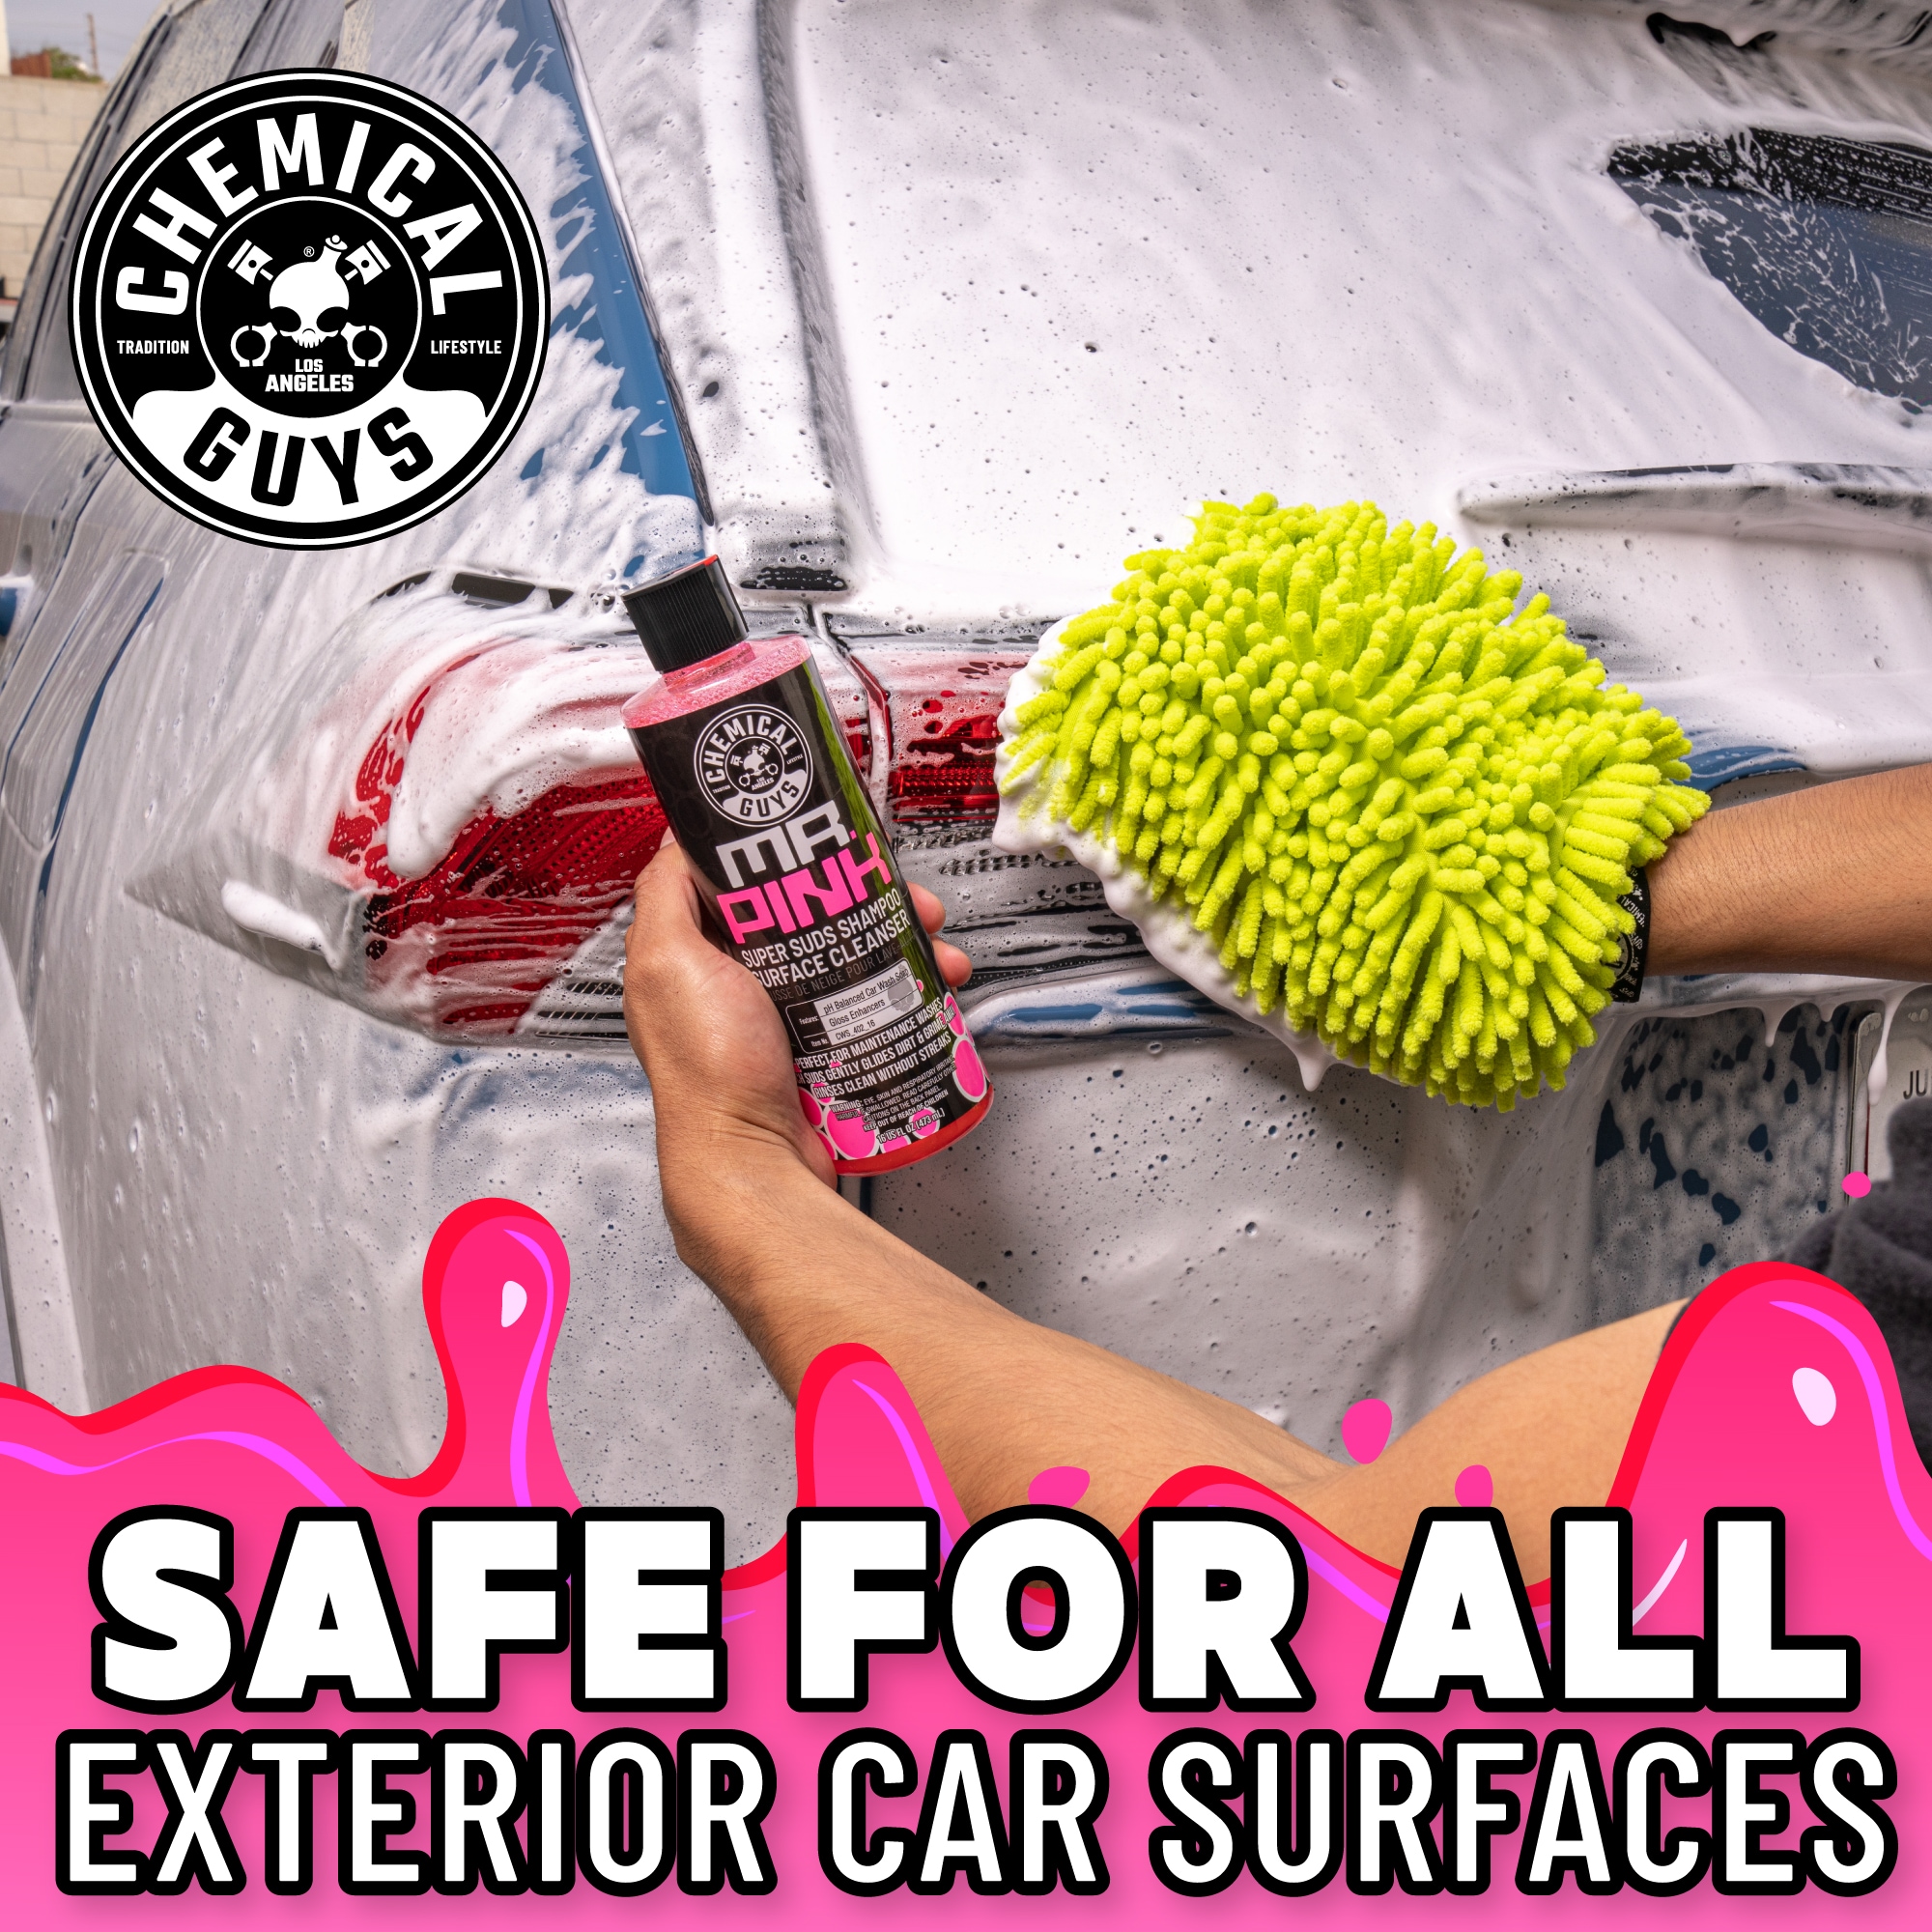 Pink Car Soap - pH Balanced, Additive-Free Car Wash Soap for a